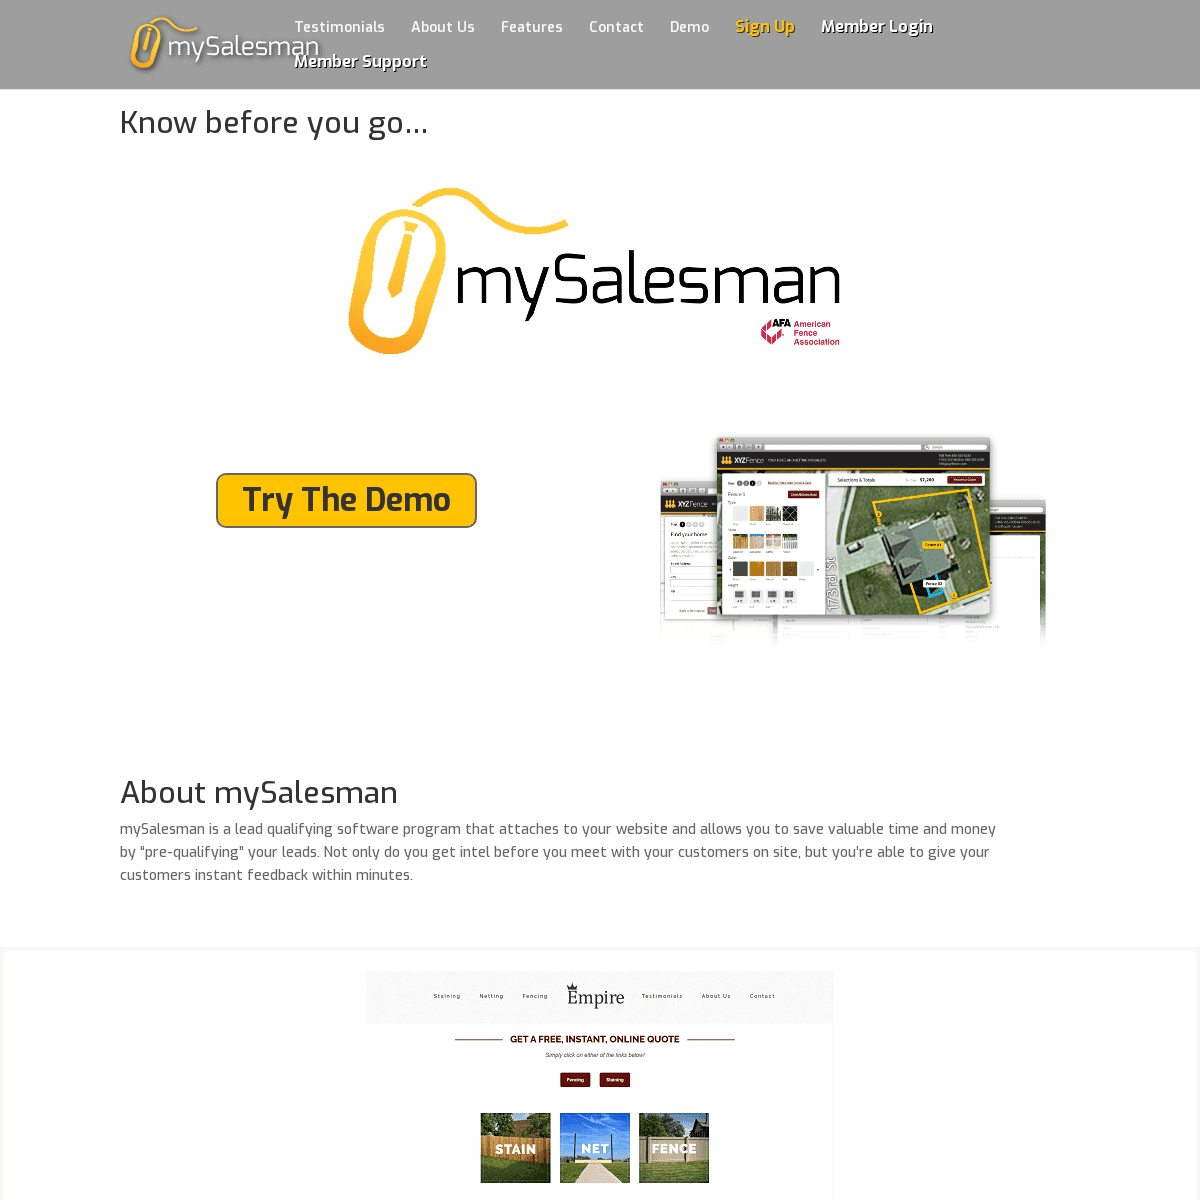 A complete backup of mysalesman.com